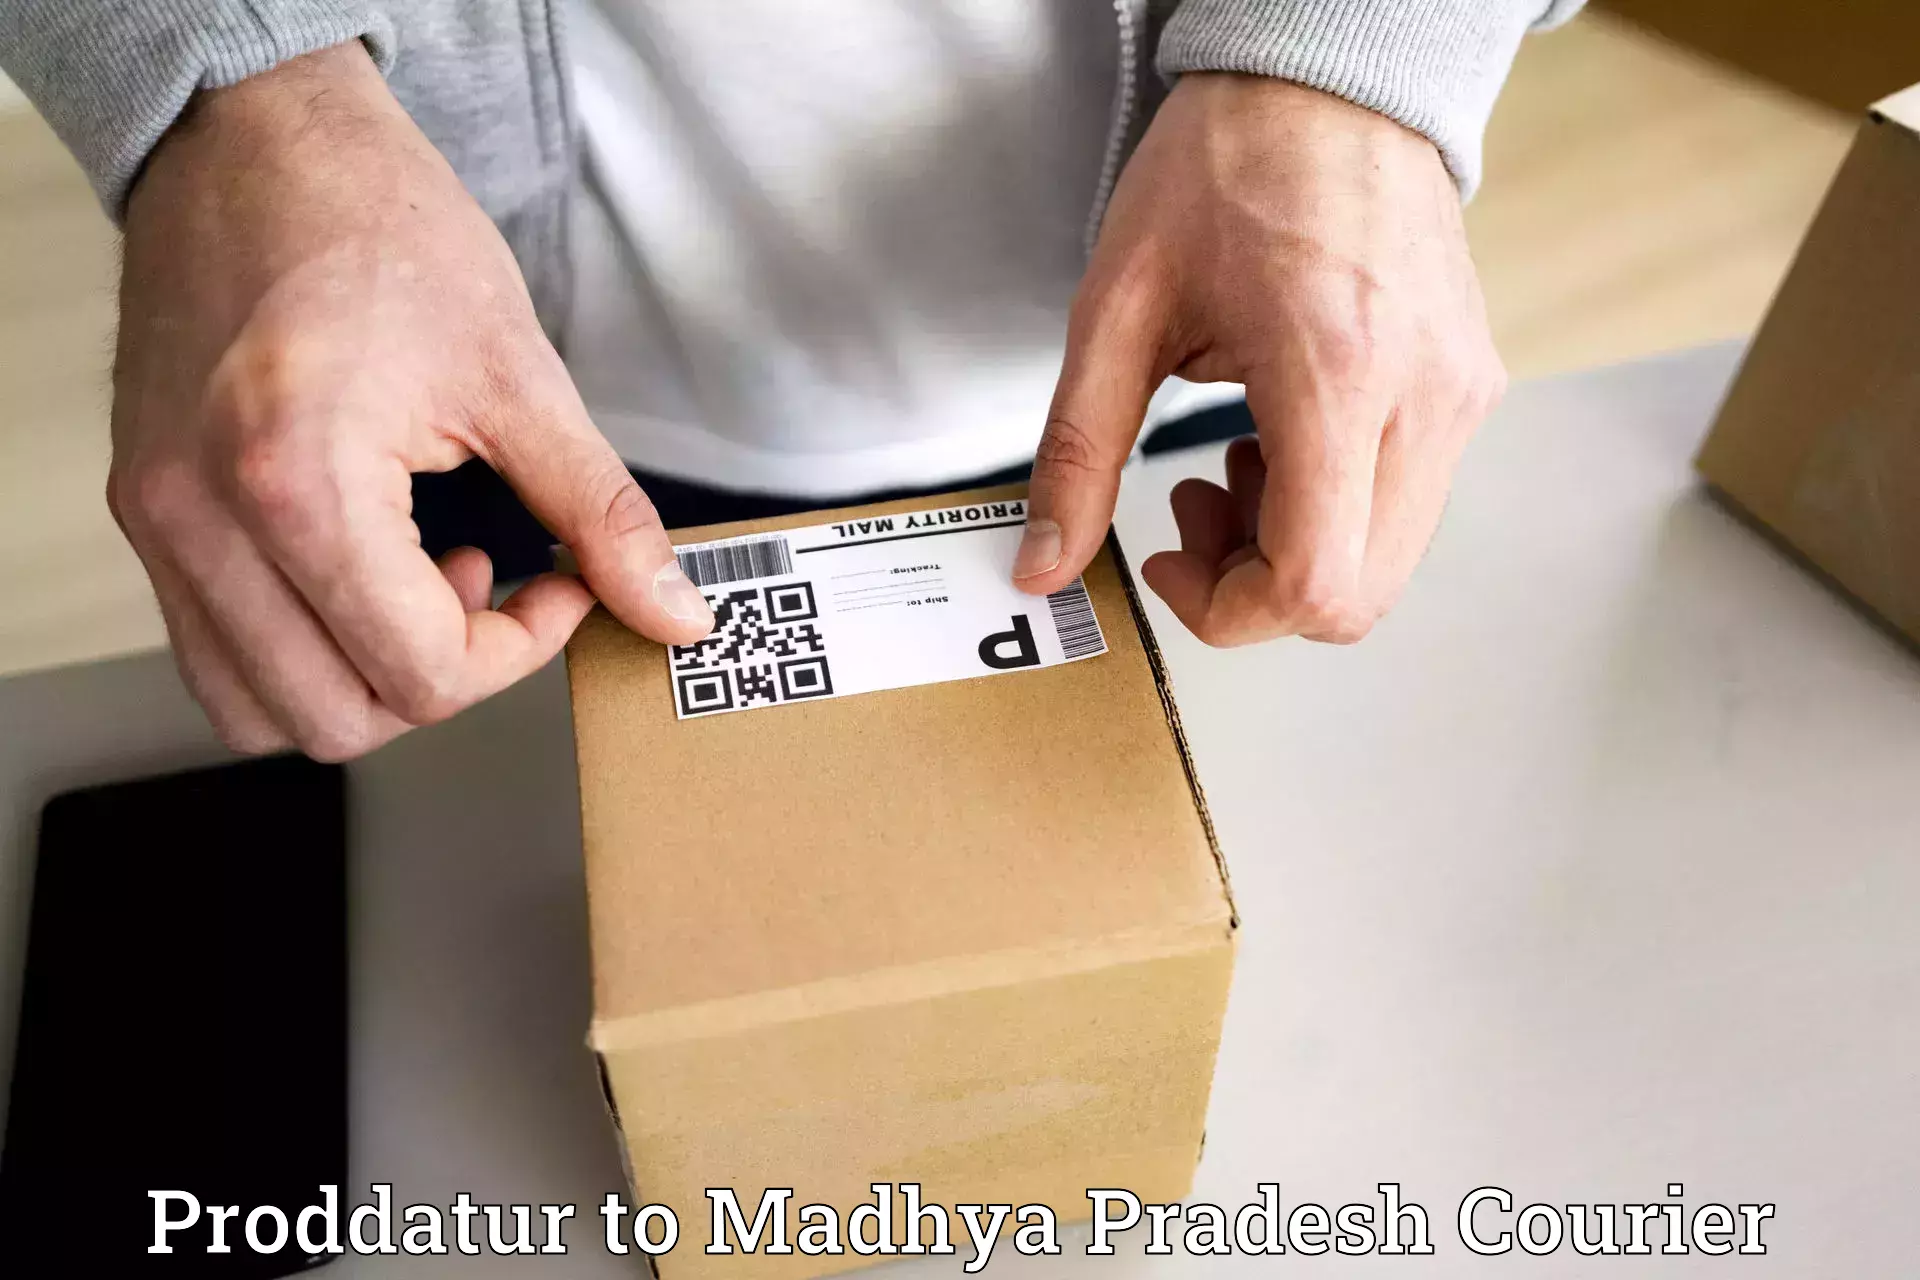 Lightweight parcel options Proddatur to Rahatgarh